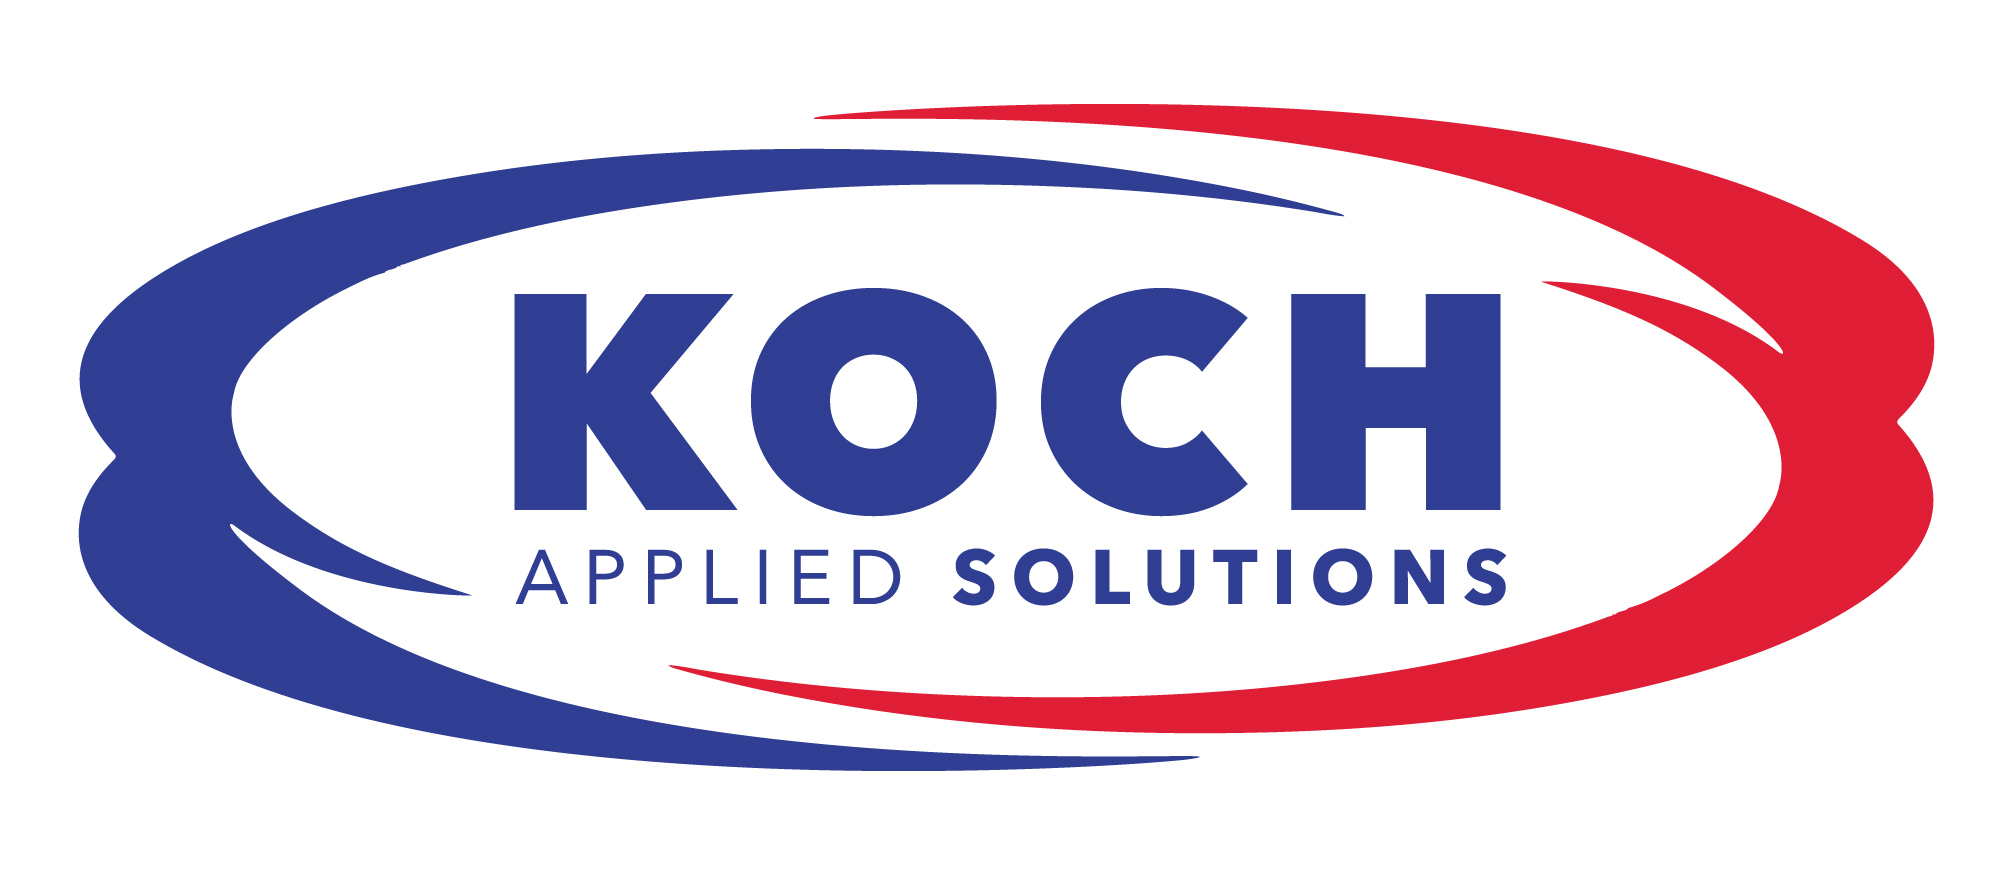 Koch Applied Solutions